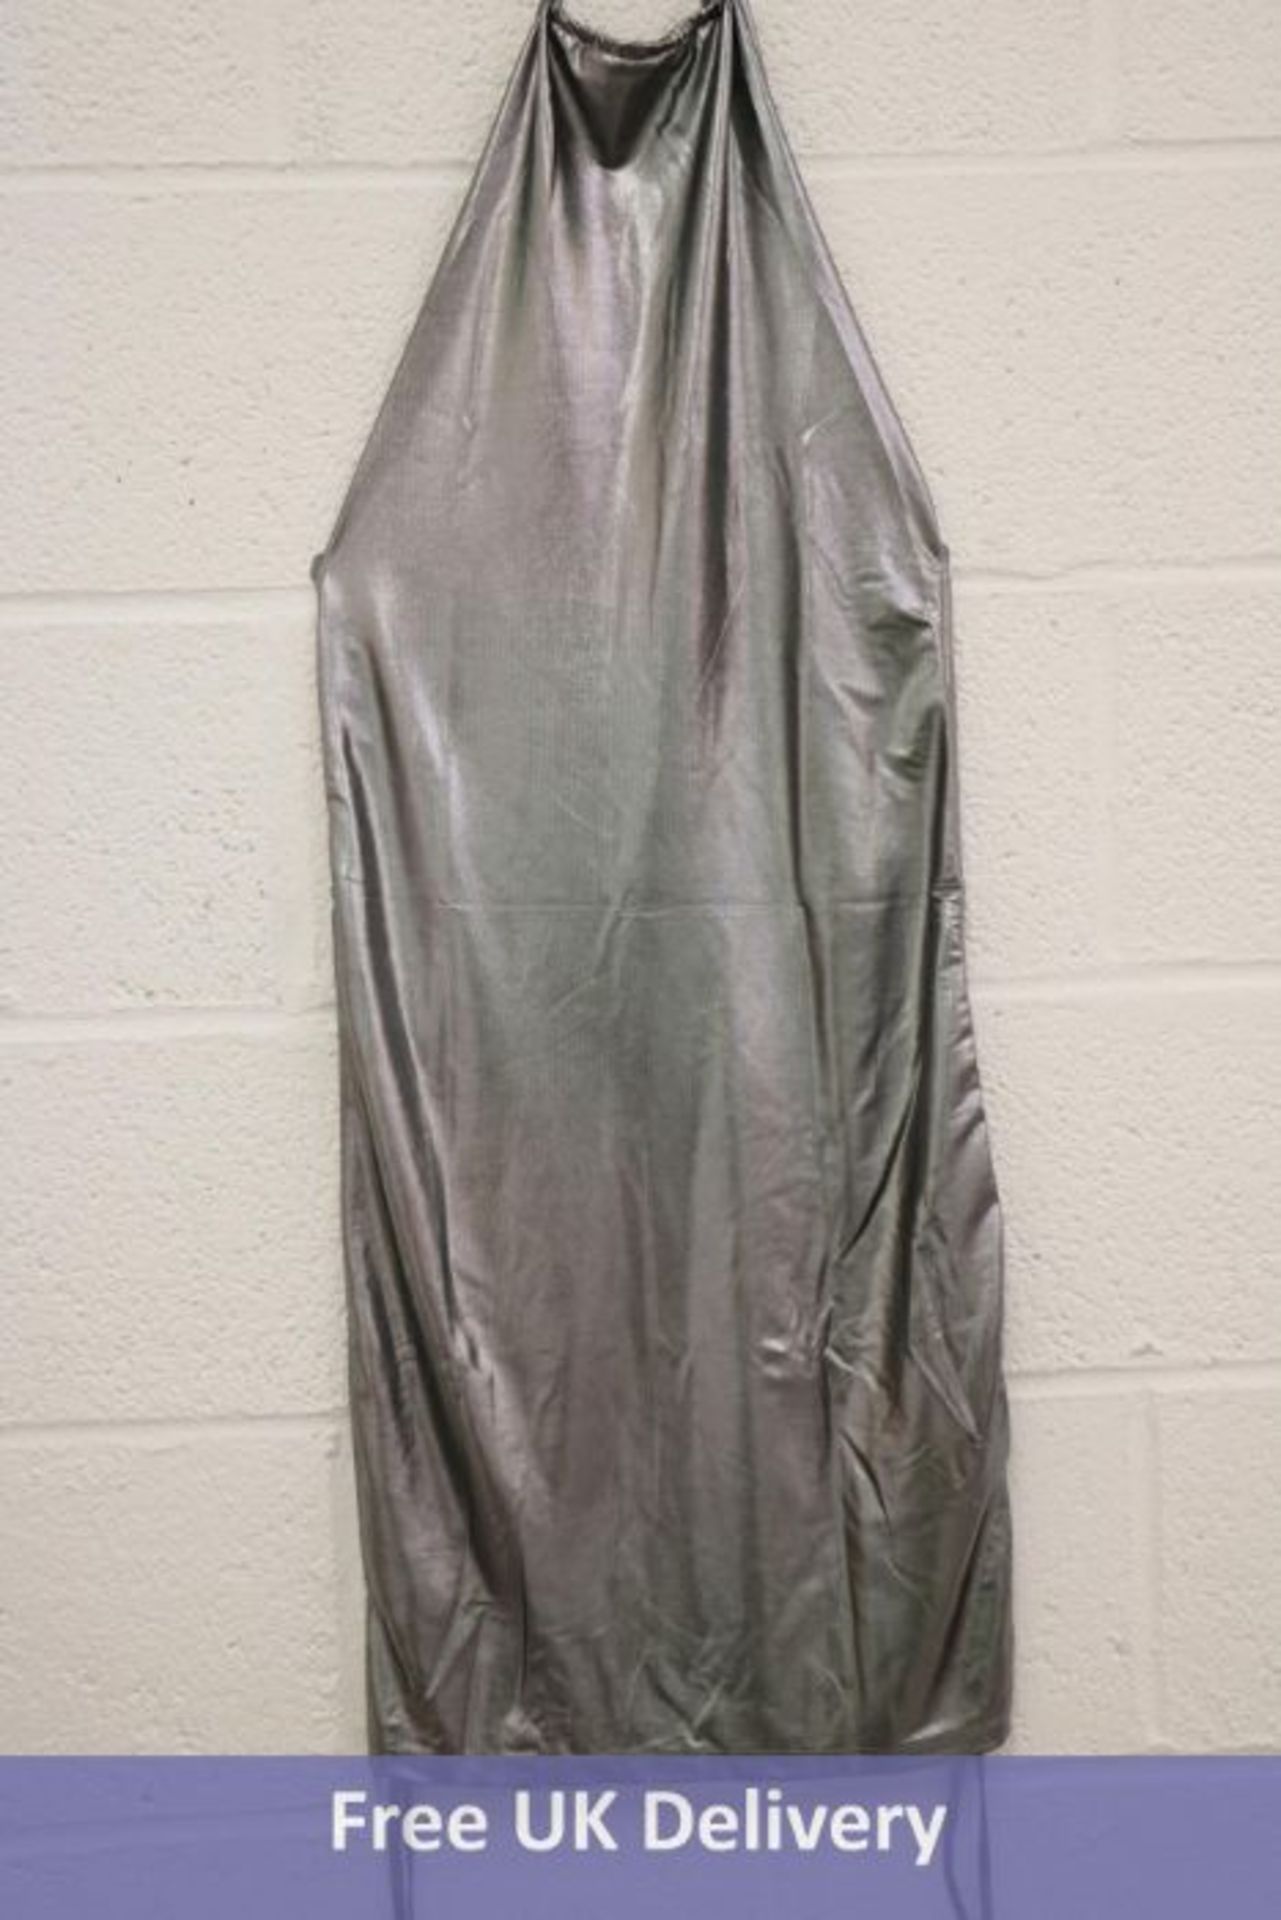 Four Motel Women's Nowa Dress, Silver Metalic, Size L - Image 2 of 2